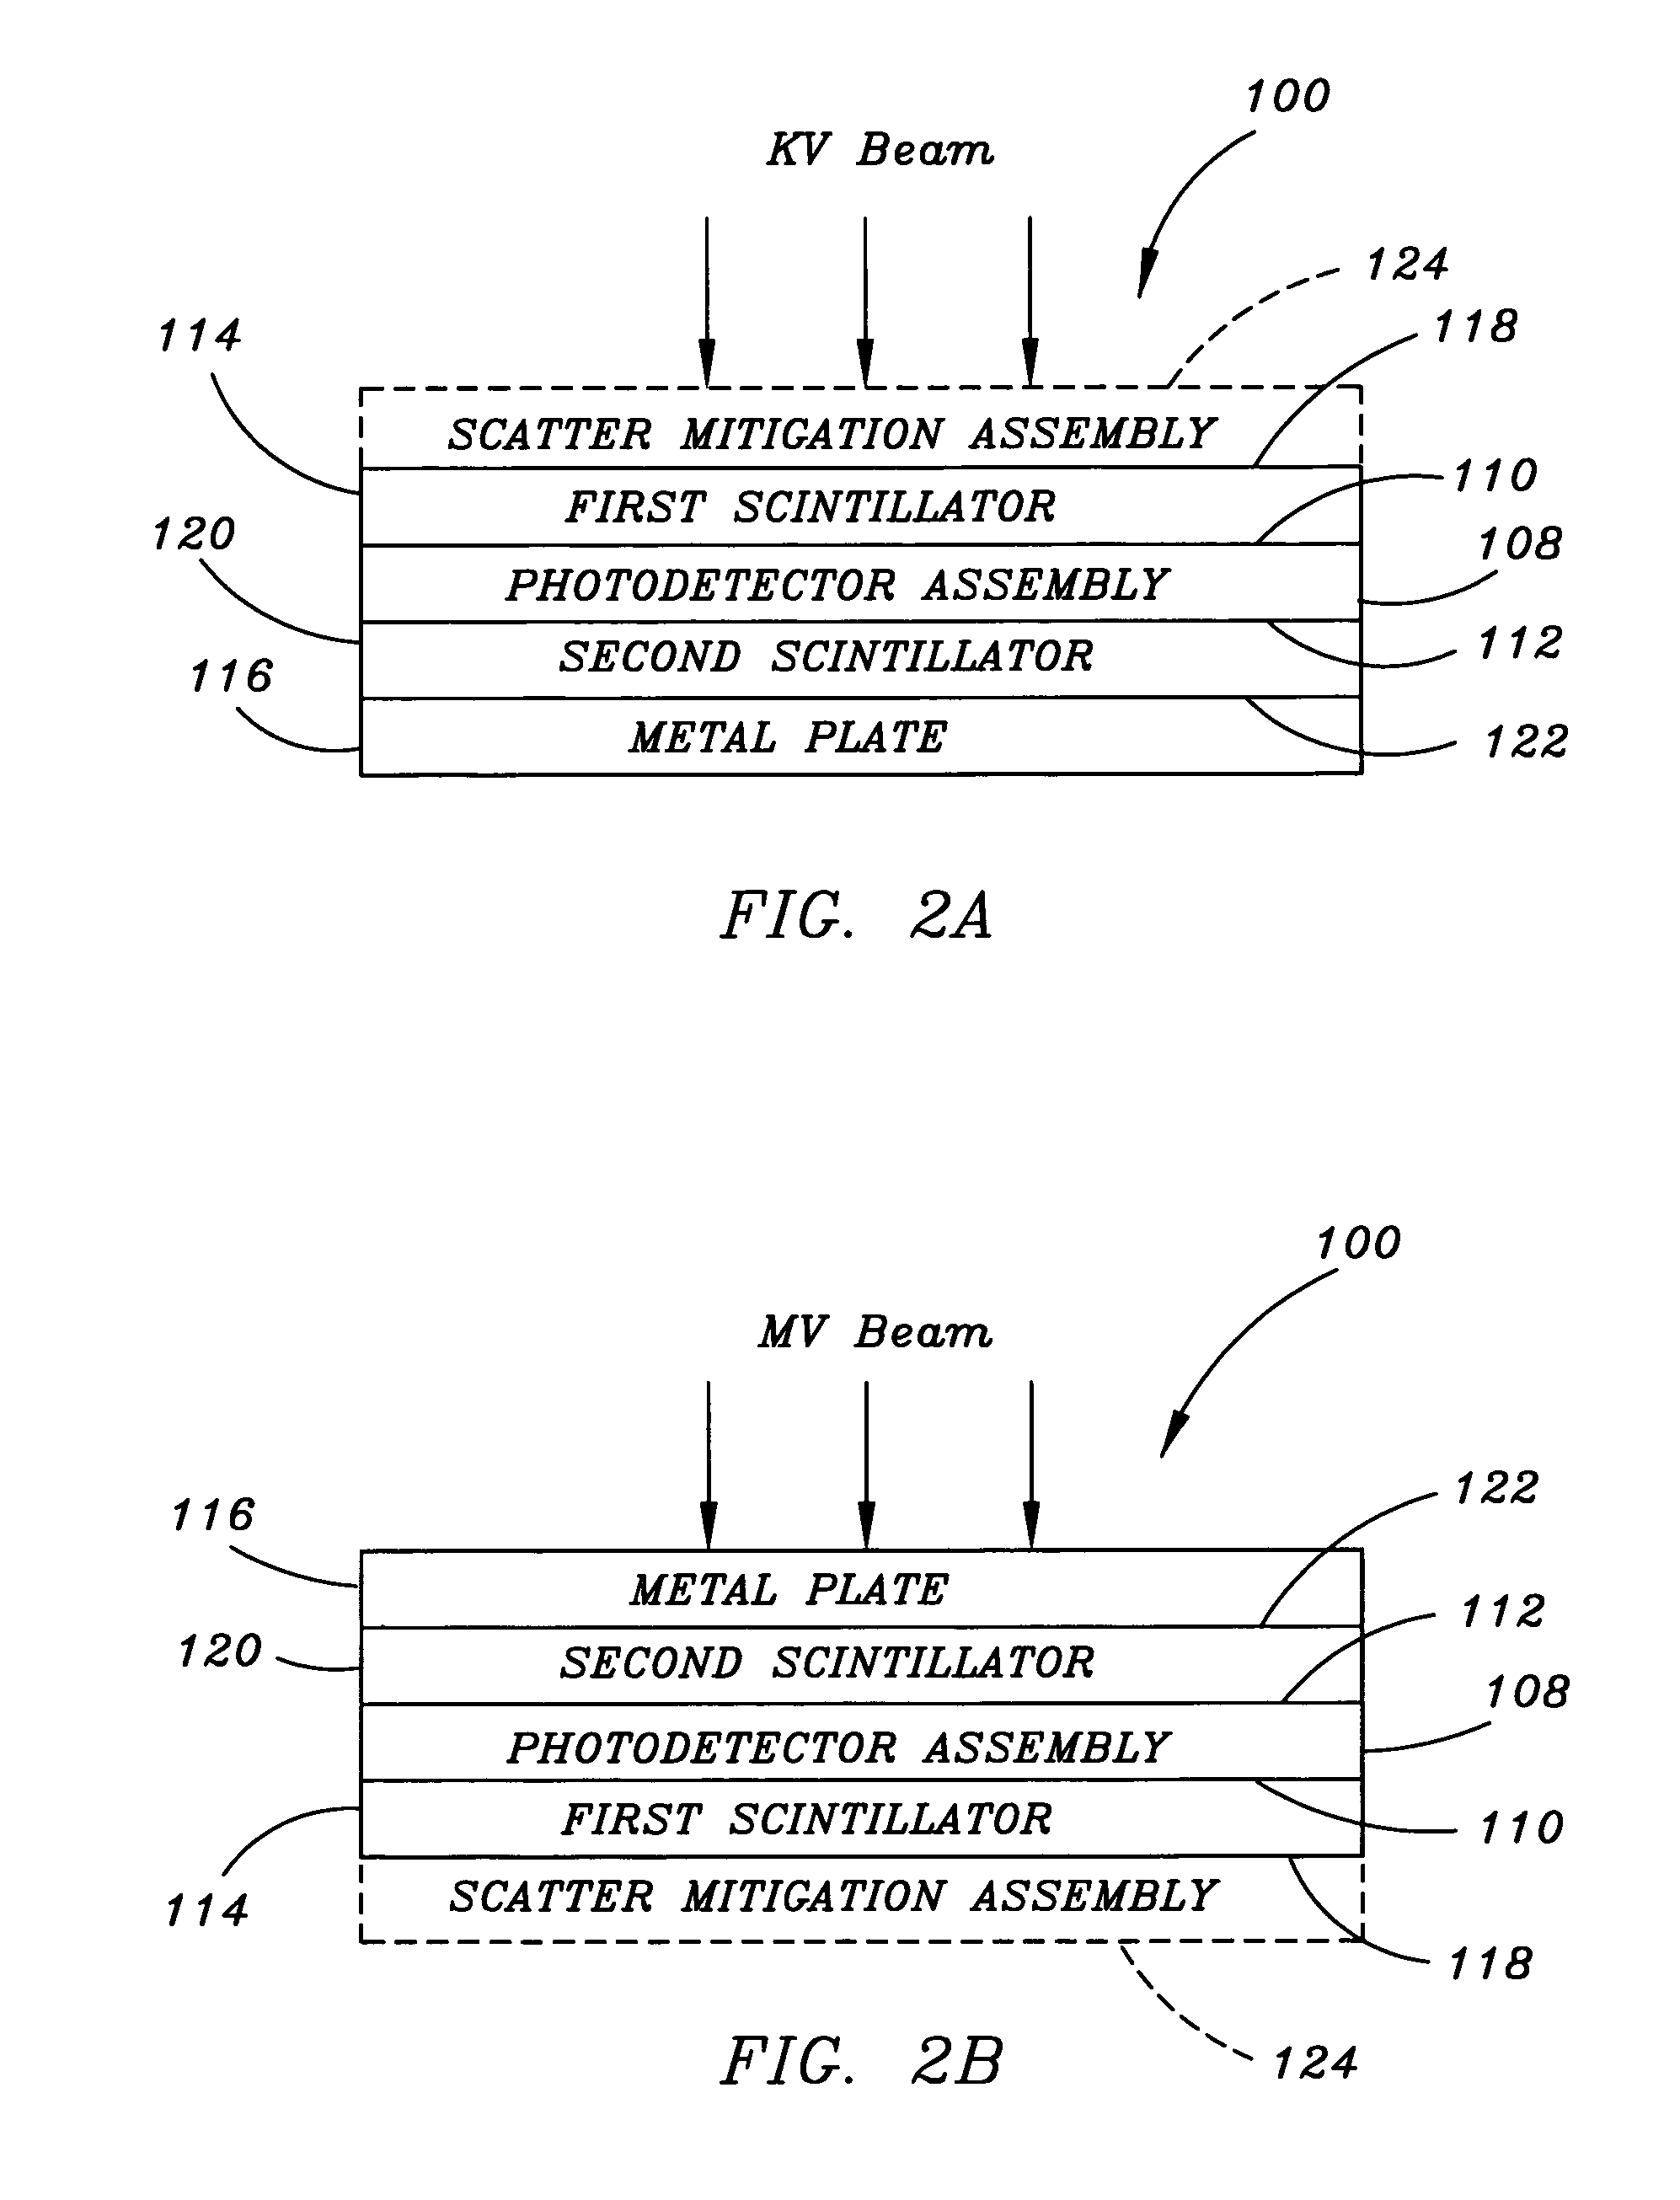 Flat panel detector with KV/MV integration